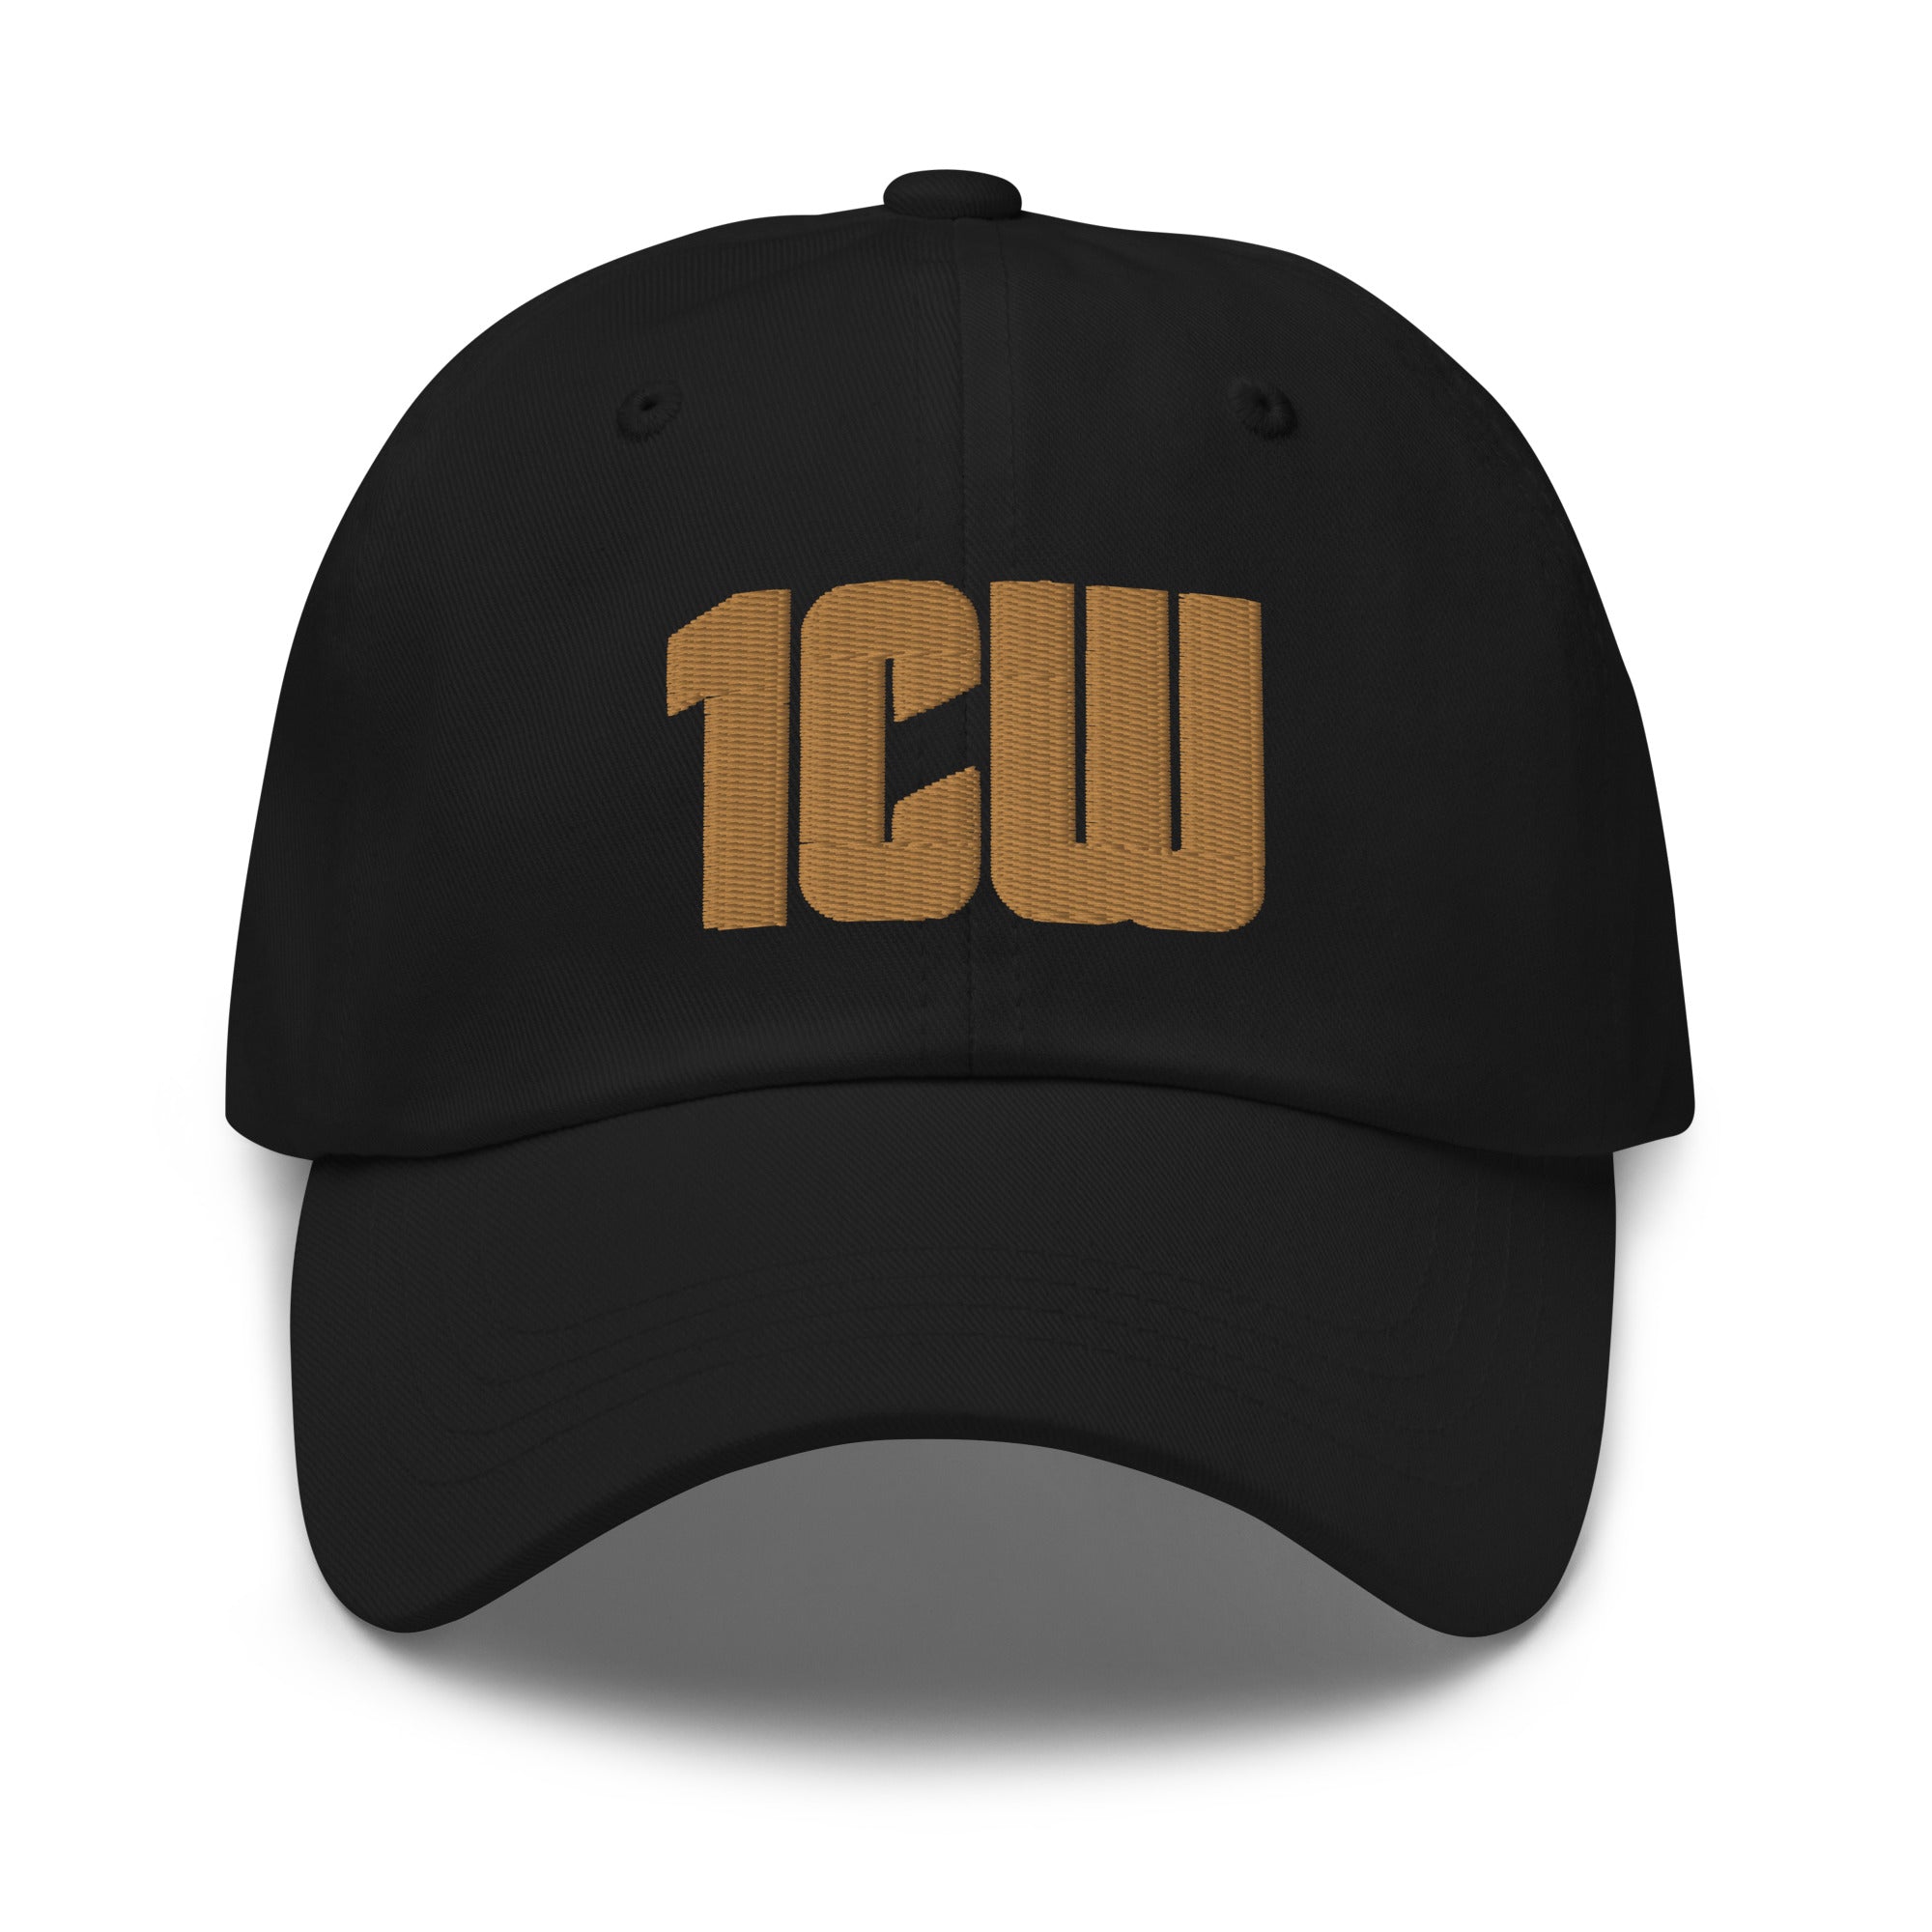 1CW Pro Wrestling Classic Dad Hat